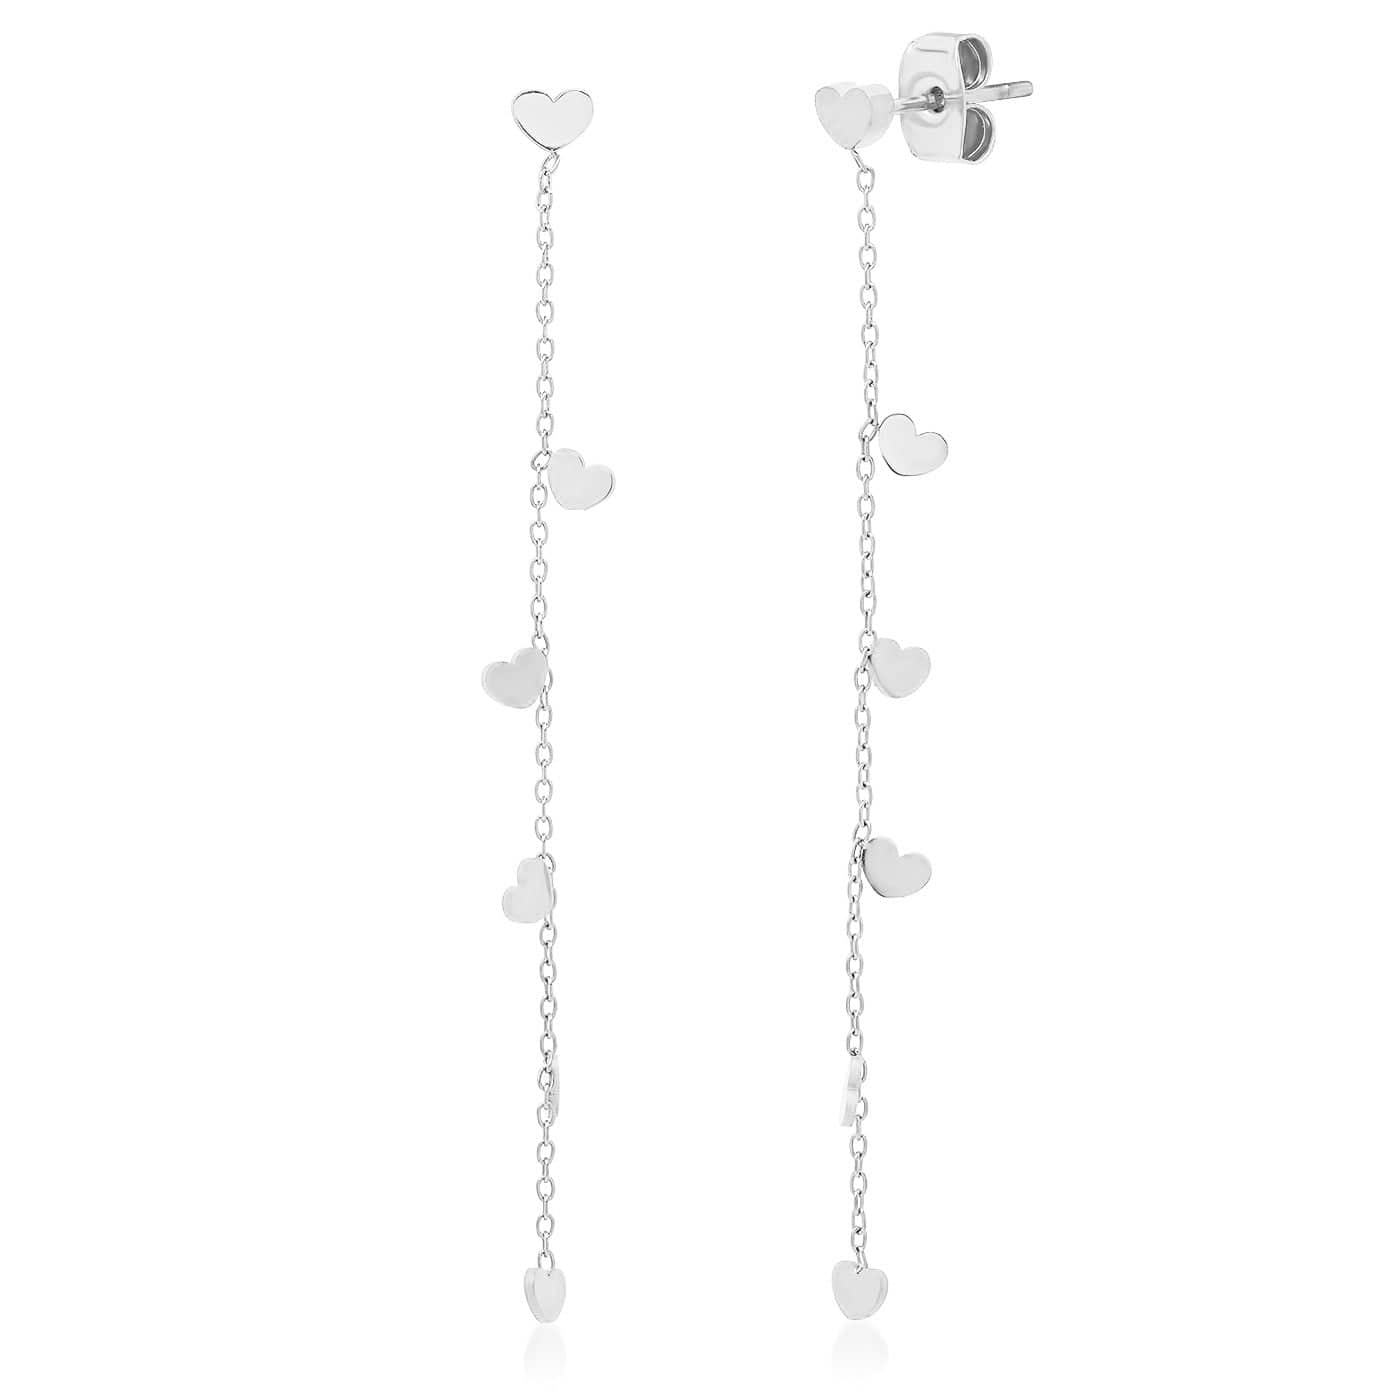 TAI JEWELRY Earrings Silver Chain Dangle Earrings With Heart Charms